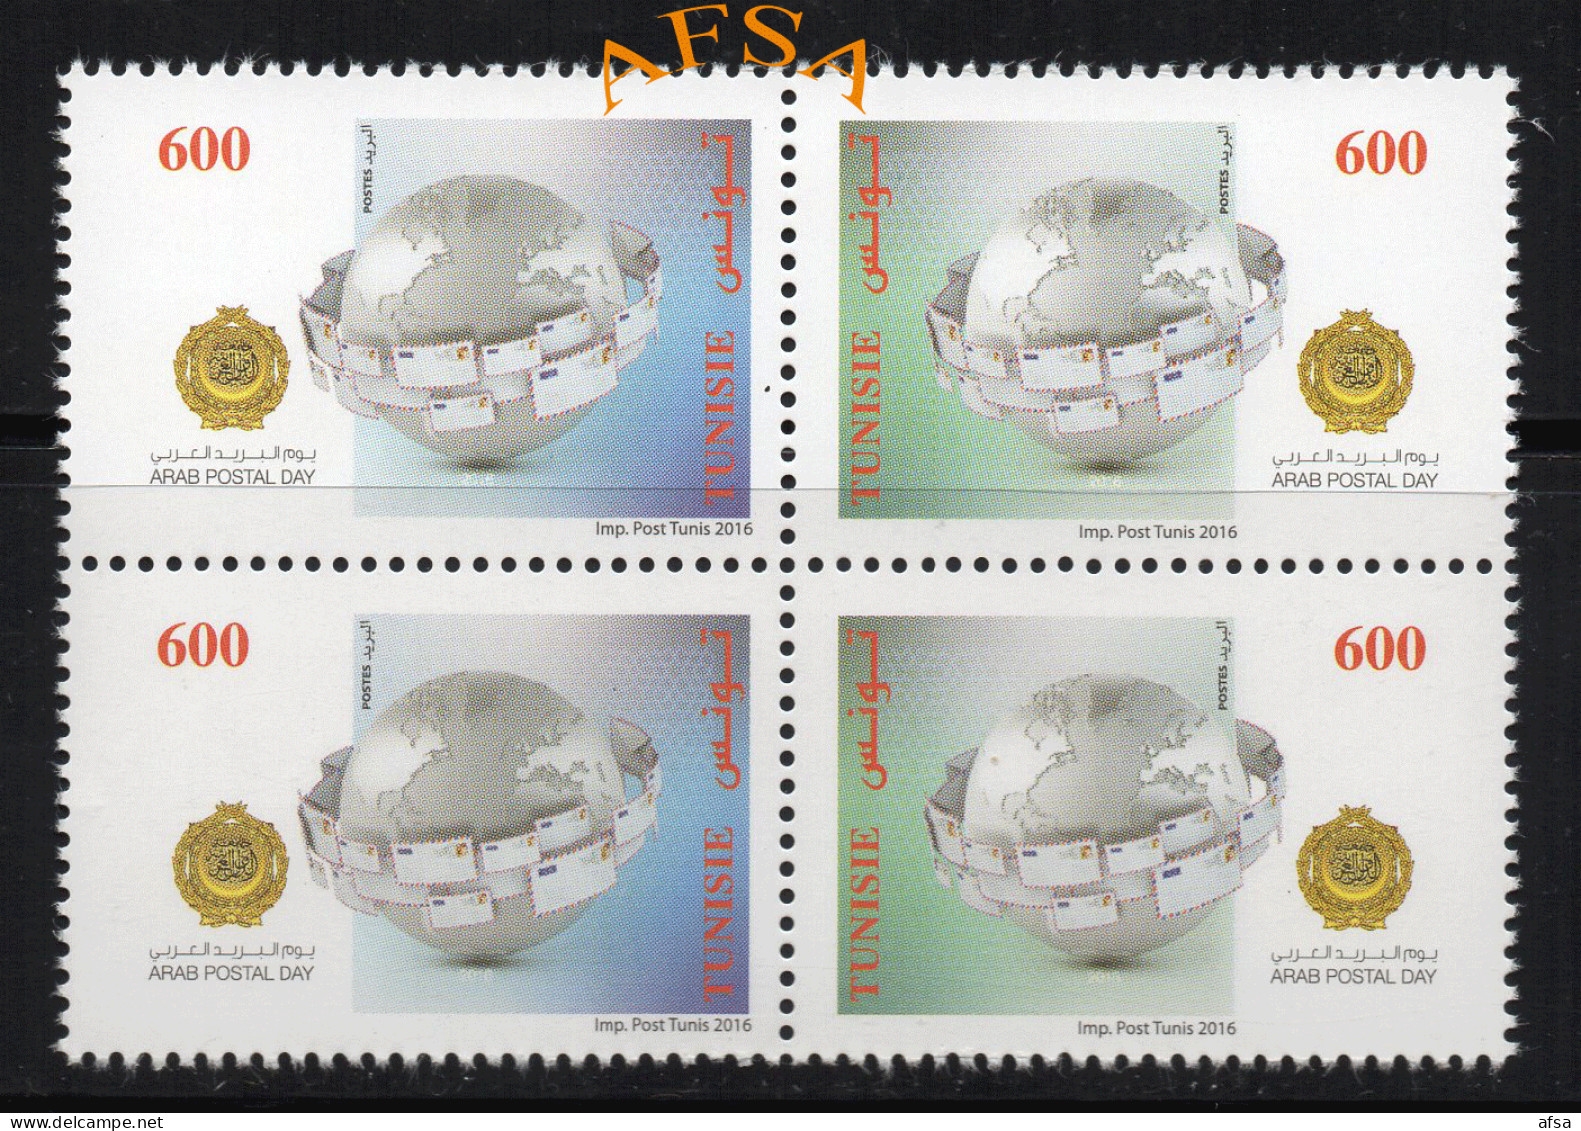 Tunisia 2016-Arab Postal Day-(Block Of 4) Joint Issue With Egypt,Jordan,Bahrain,UAE.Lebanon,irak - Neufs